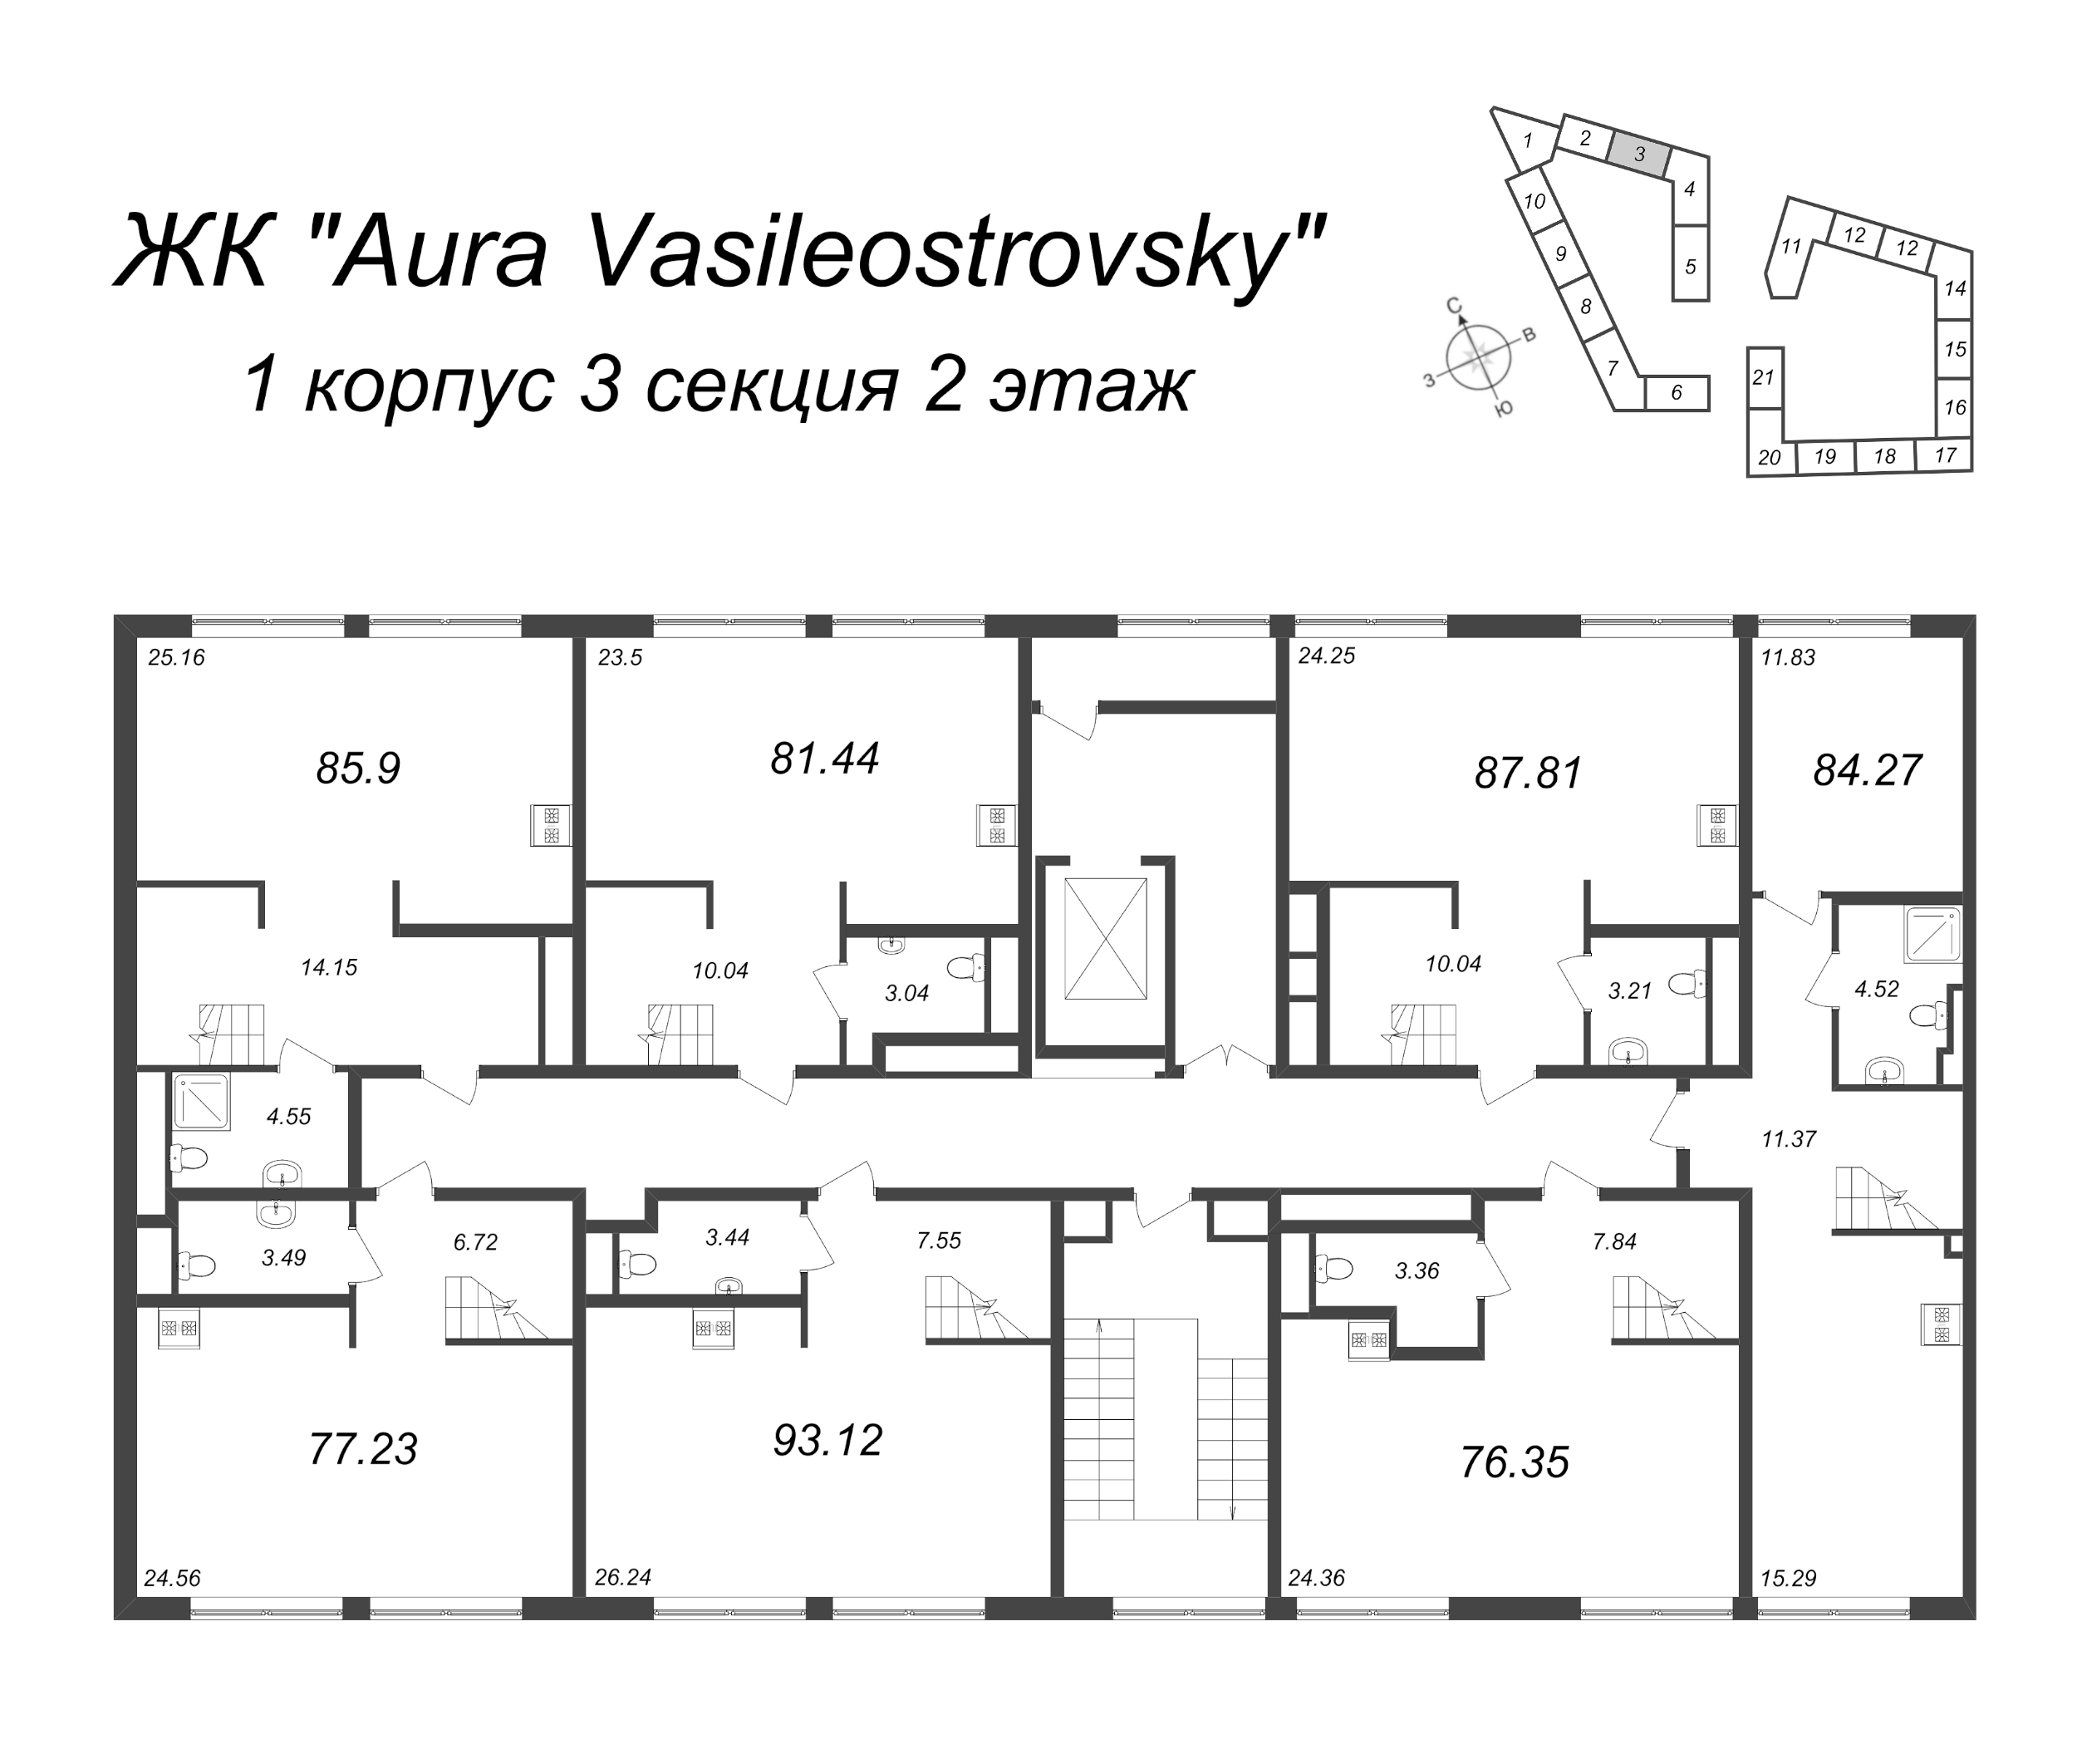 4-комнатная (Евро) квартира, 93.12 м² - планировка этажа